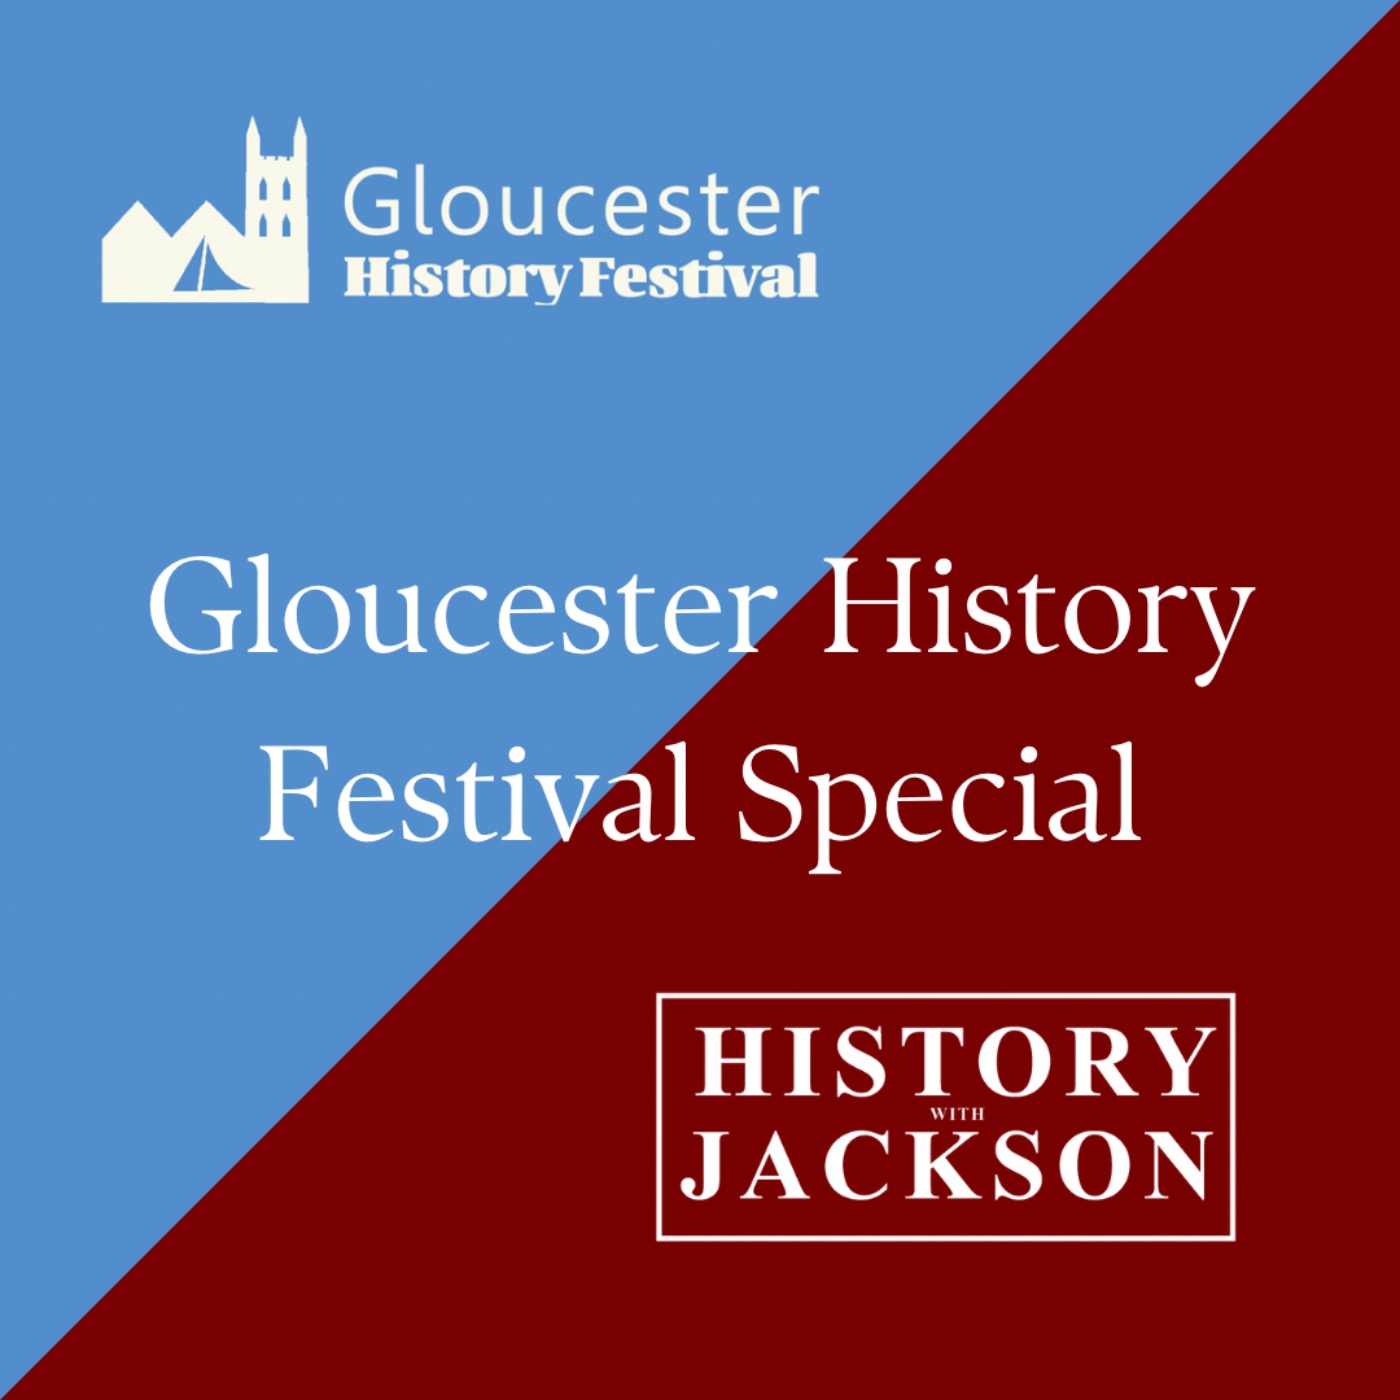 Gloucester History Festival: Iain Dale